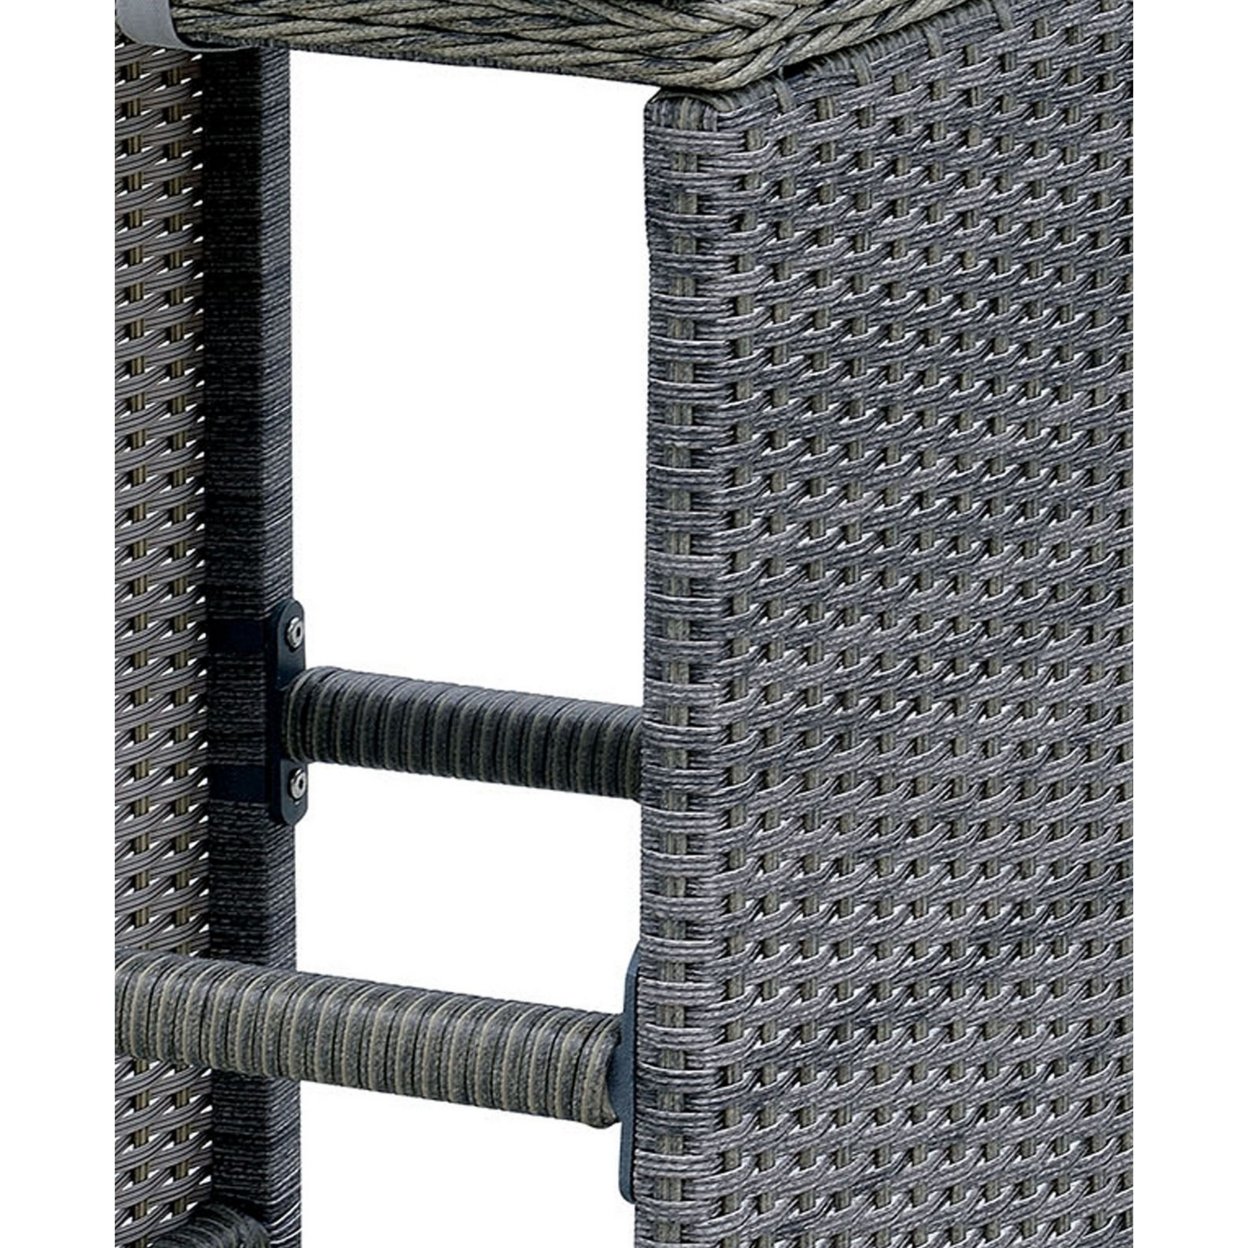 6 Piece Patio Bar Stool In Aluminum Wicker Frame And Padded Fabric Seat, Gray- Saltoro Sherpi